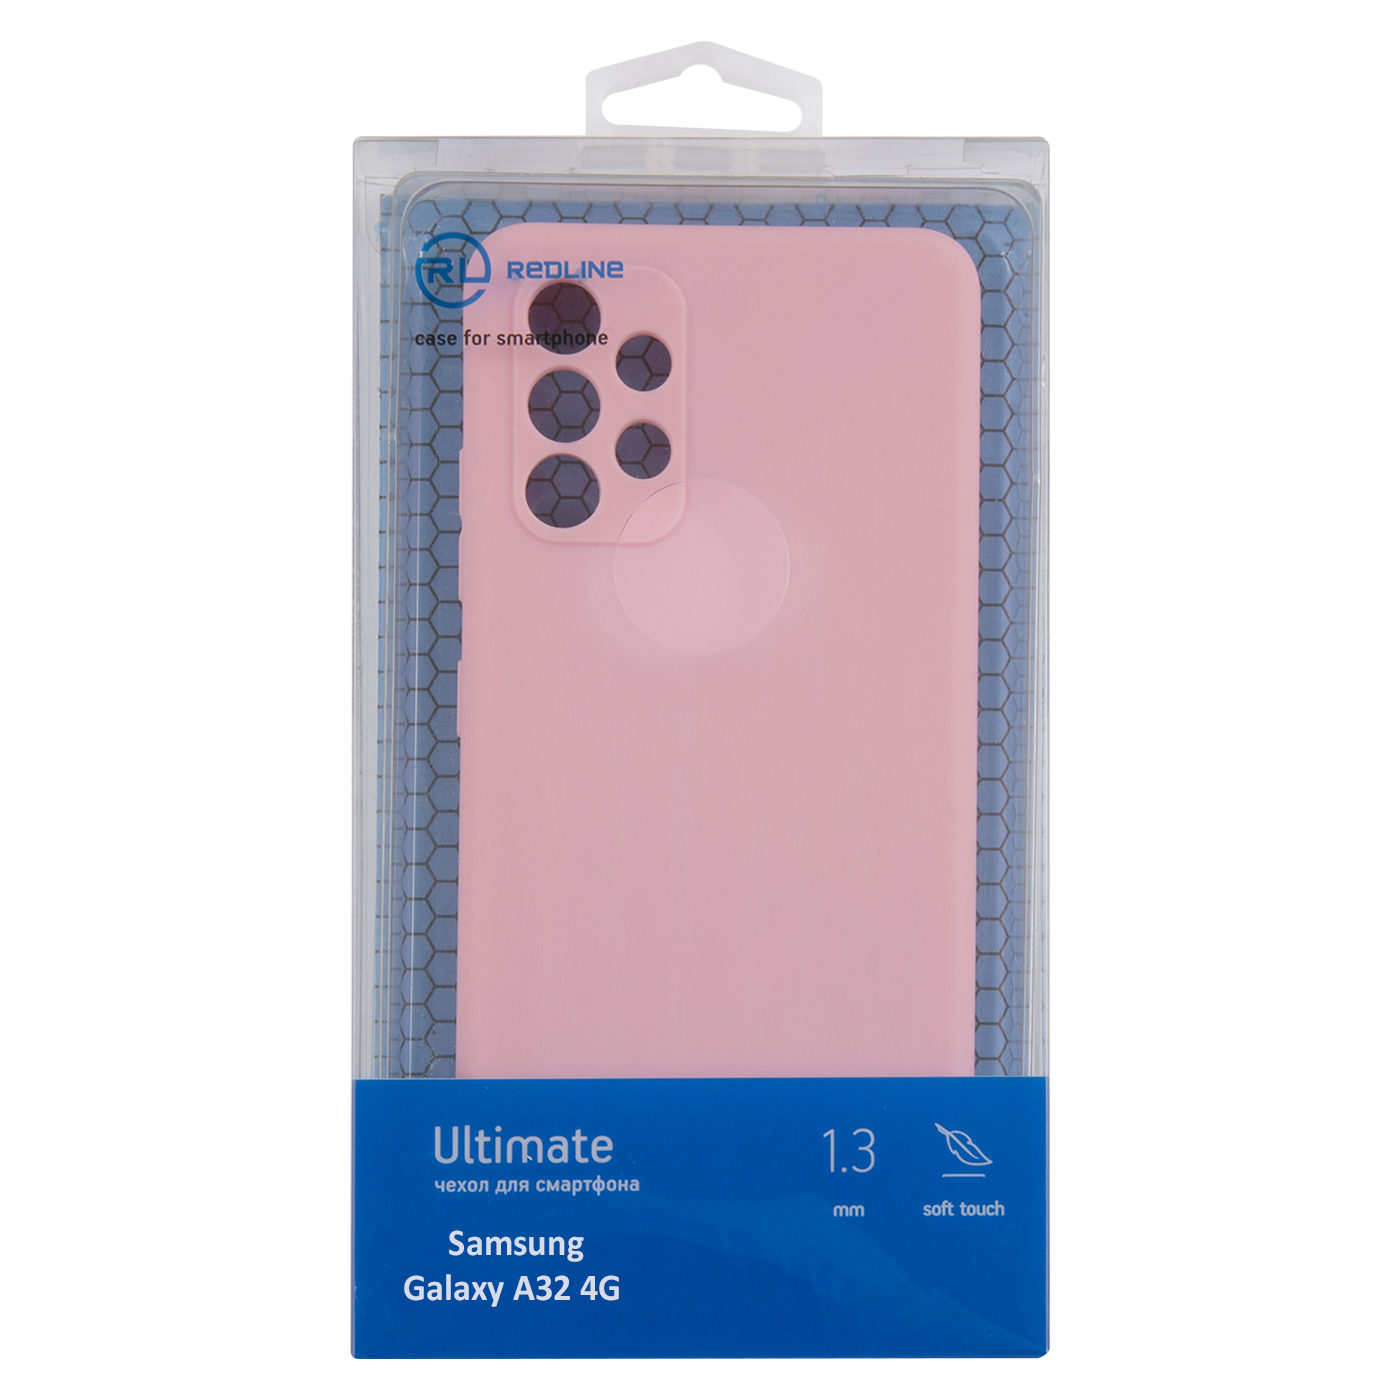 Чехол защитный Red Line Ultimate для Samsung Galaxy A32 4G, розовый УТ000024008 защитный чехол для смартфона red line ultimate для samsung galaxy a32 4g зеленый